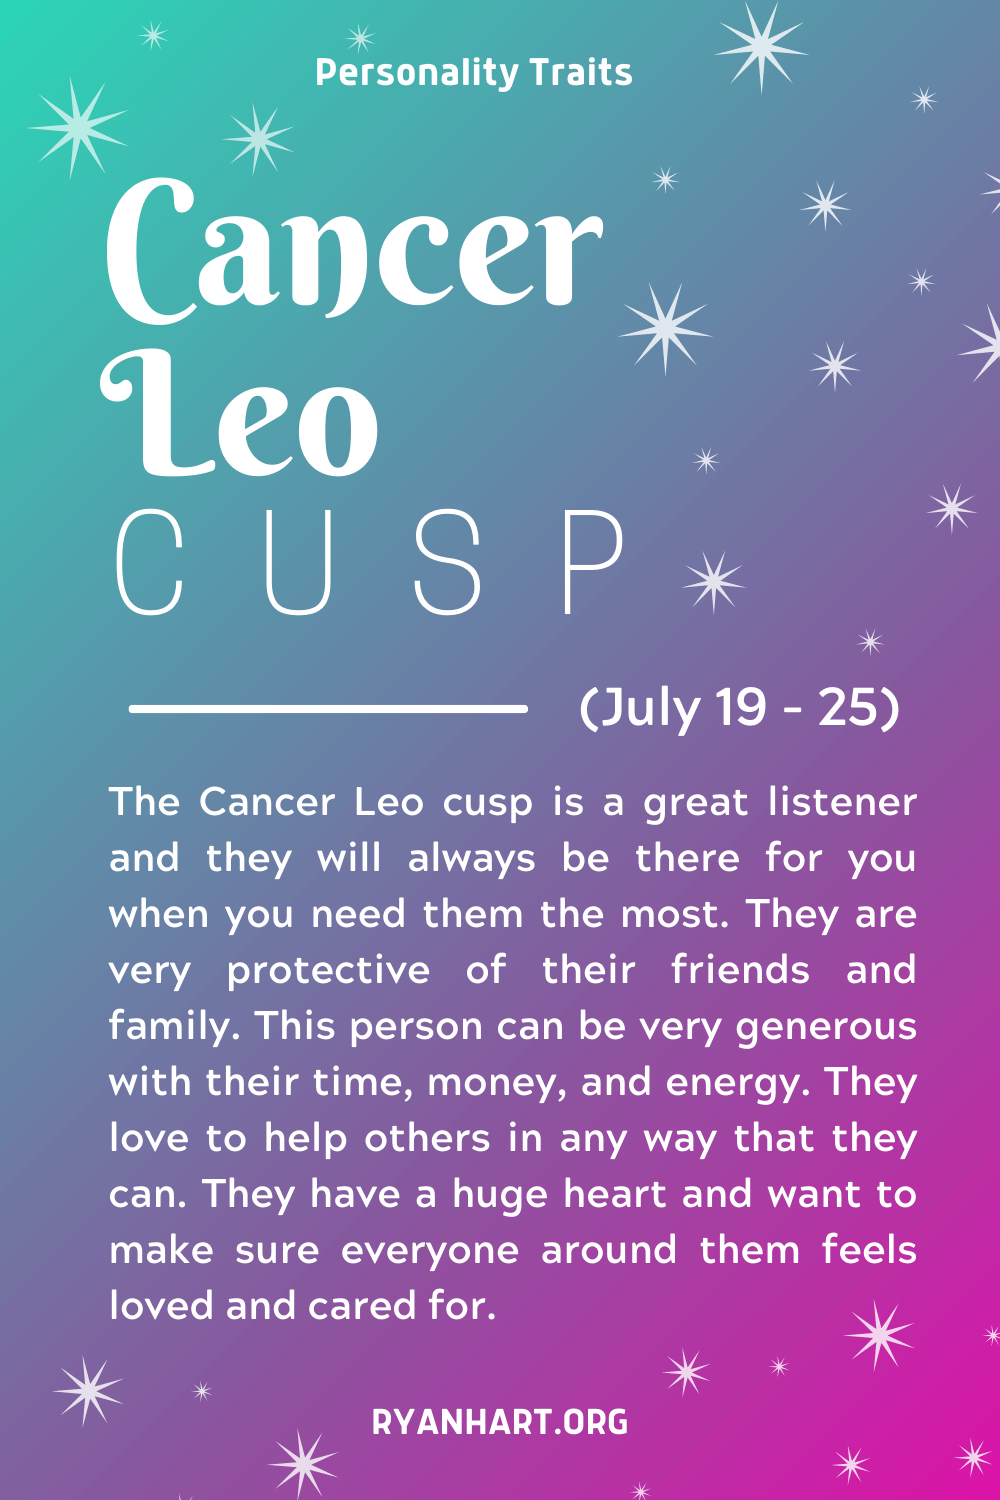 Cancer Leo Cusp Description